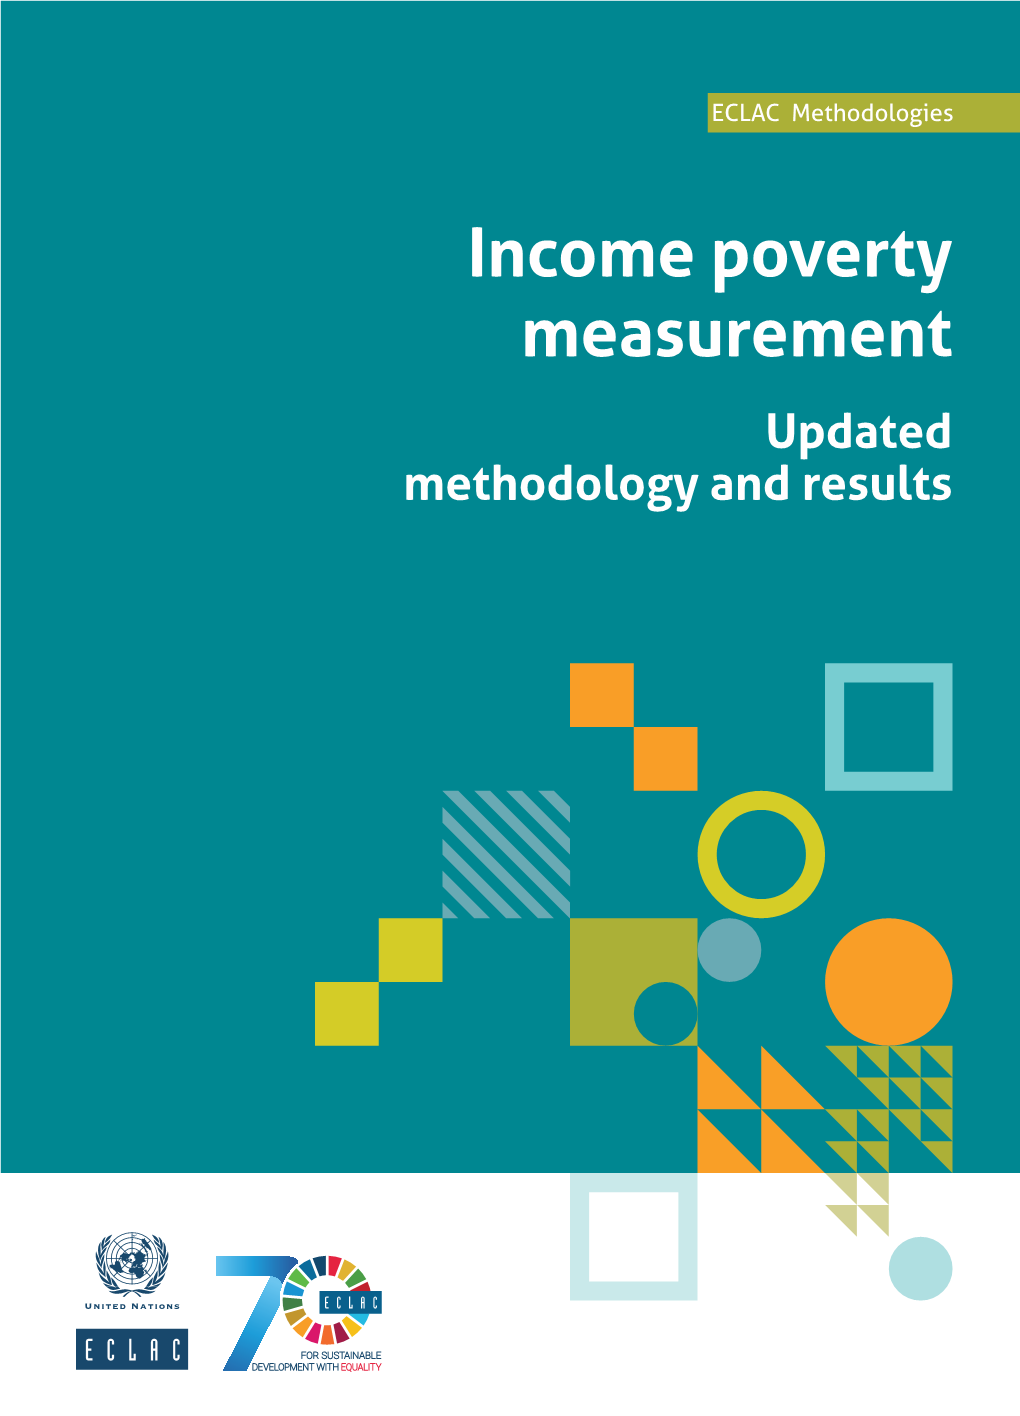 ECLAC Methodologies No. 2. Income Poverty Measurement